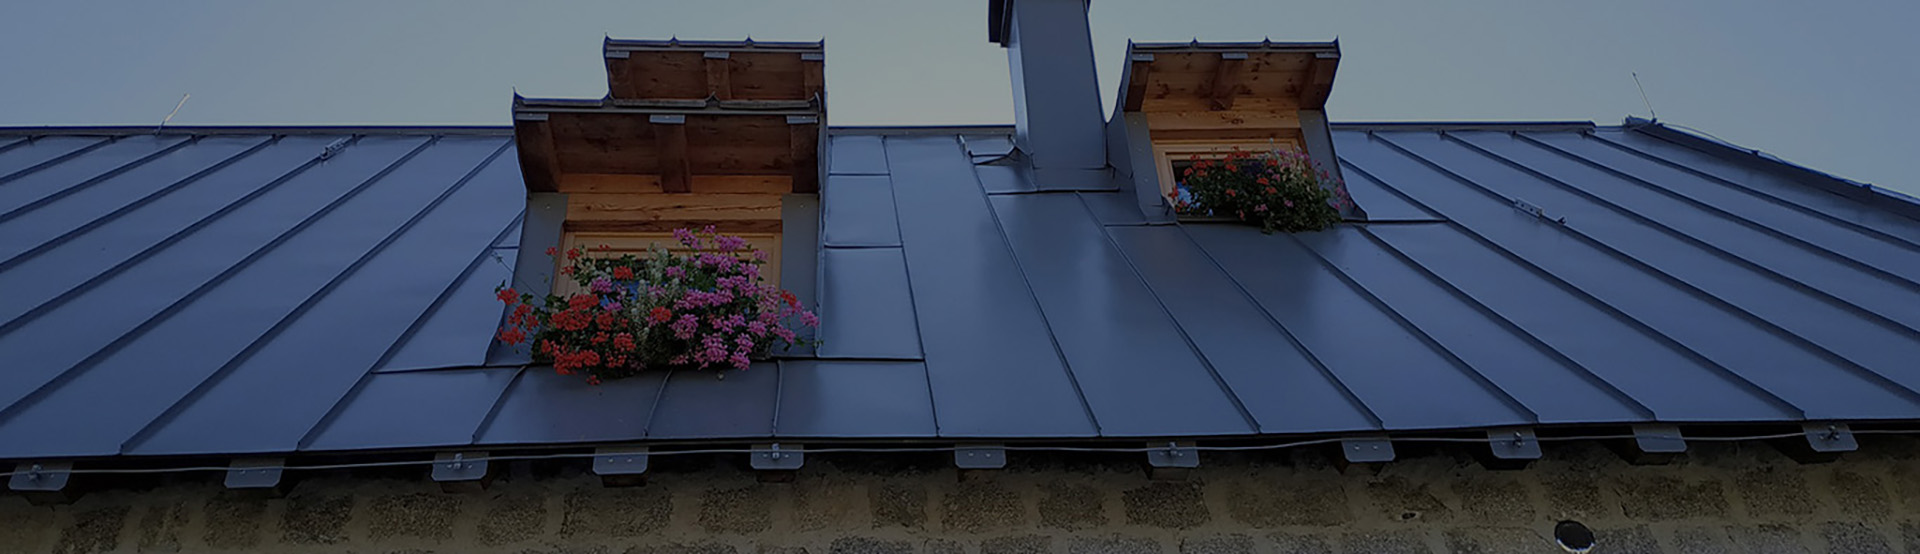 Roof de-icing for metal roofs banner